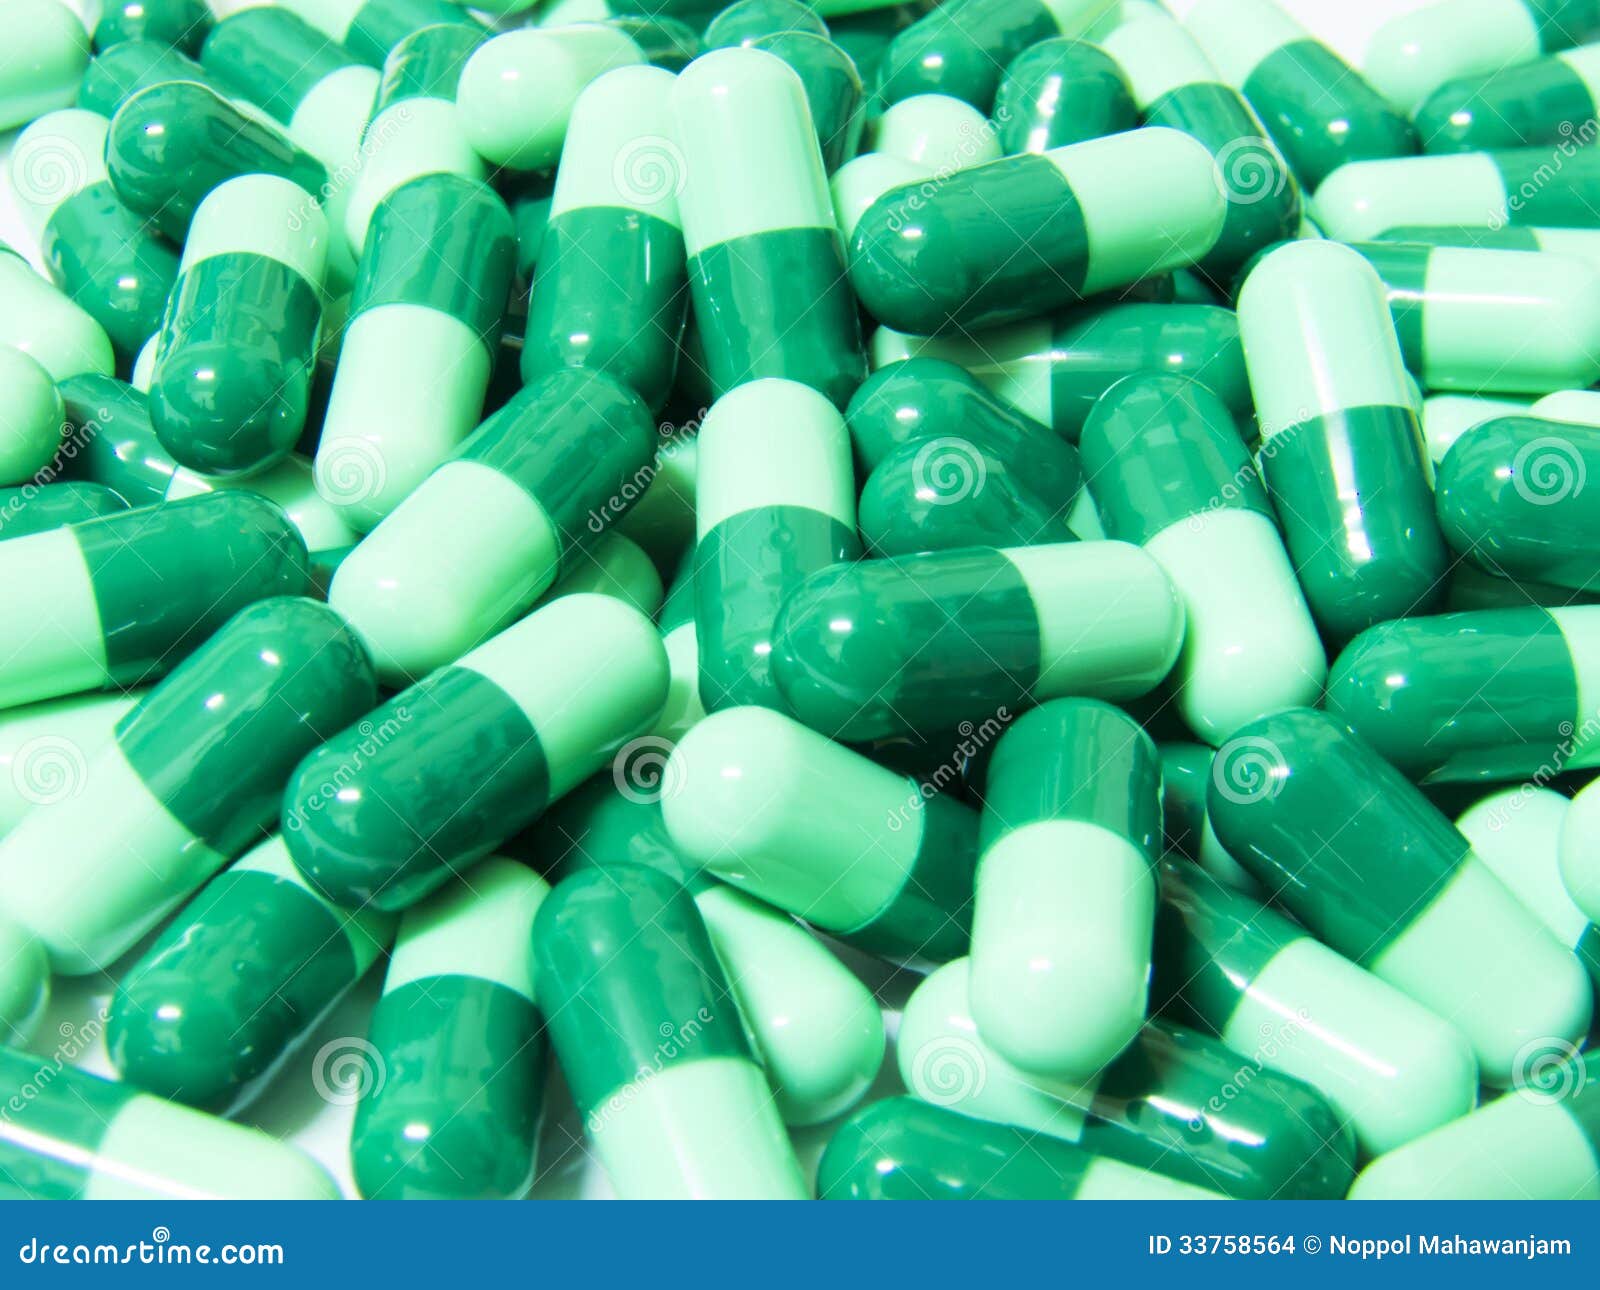 Medicine Capsule Stock Images - Image: 33758564